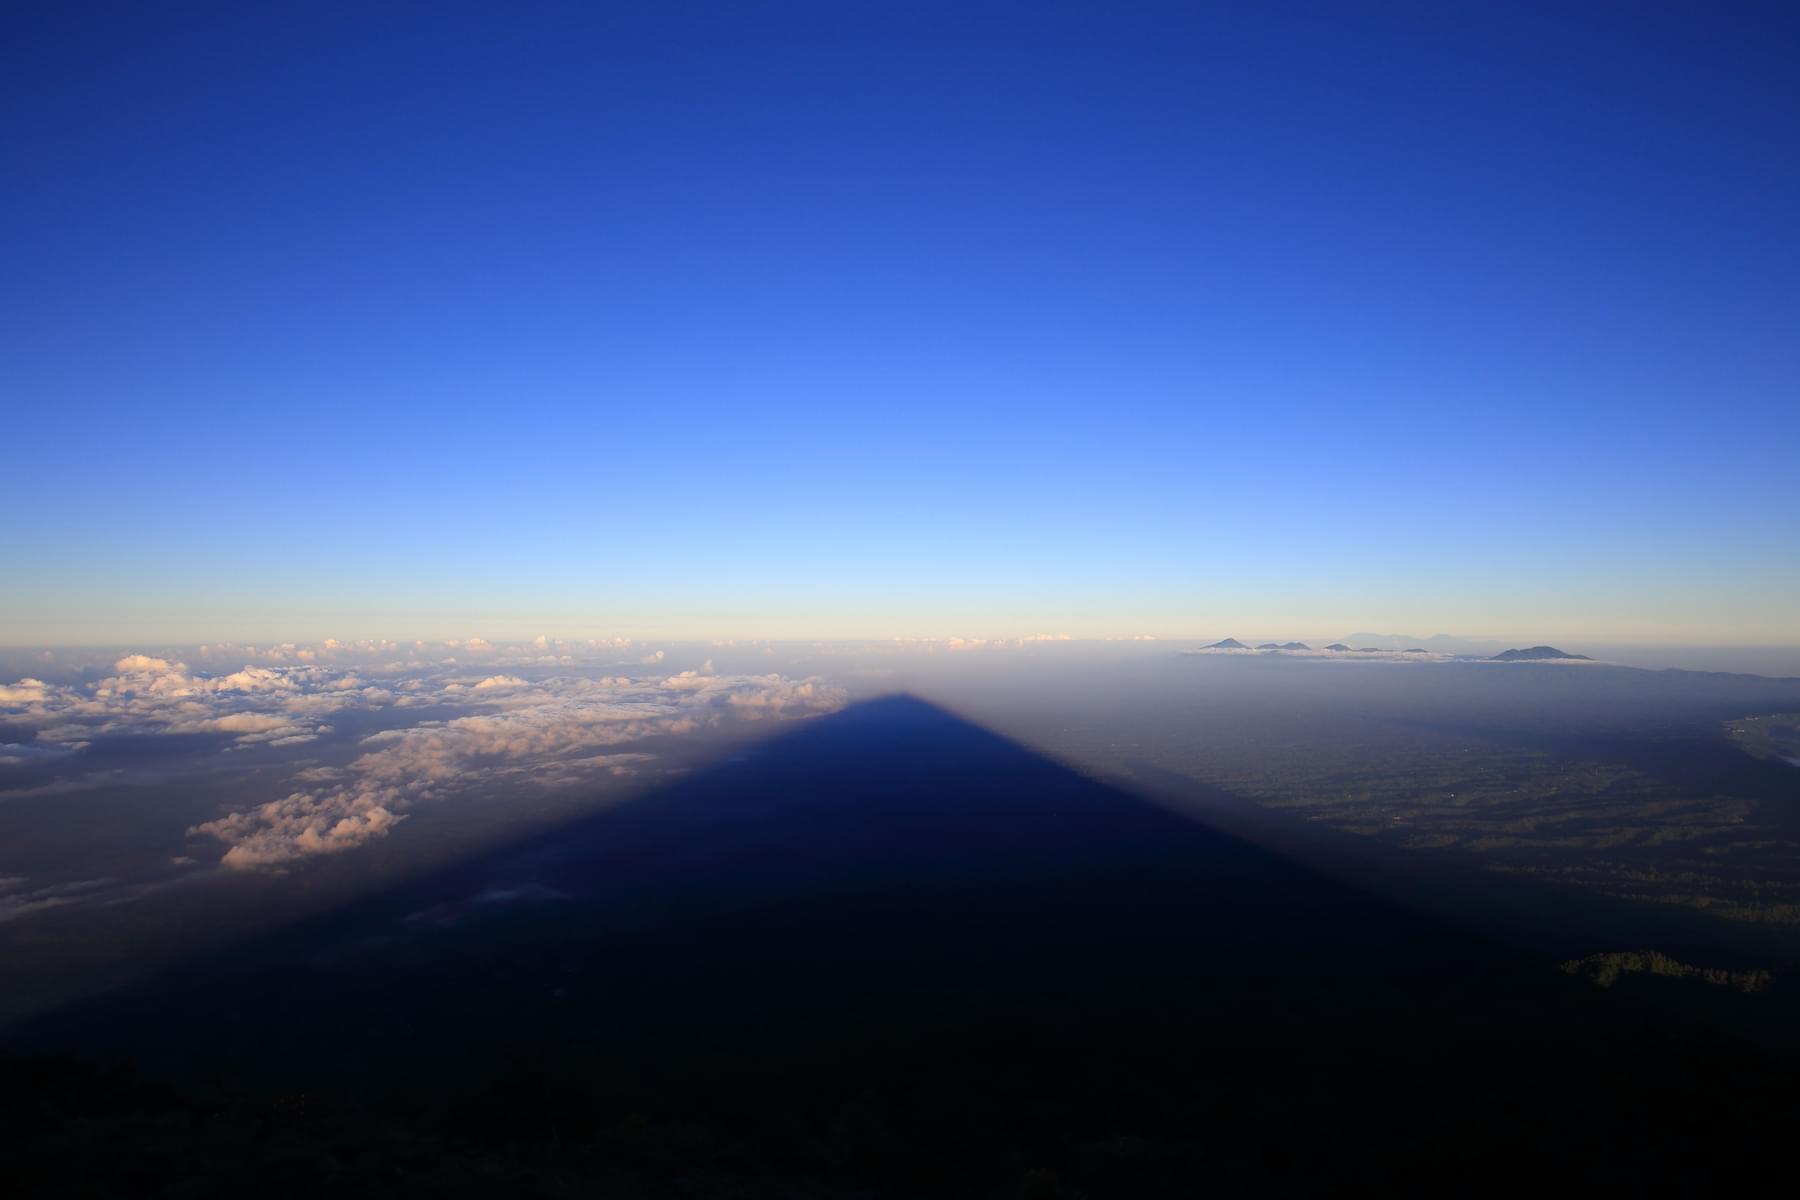 How will you start the Mount Agung Trek ?